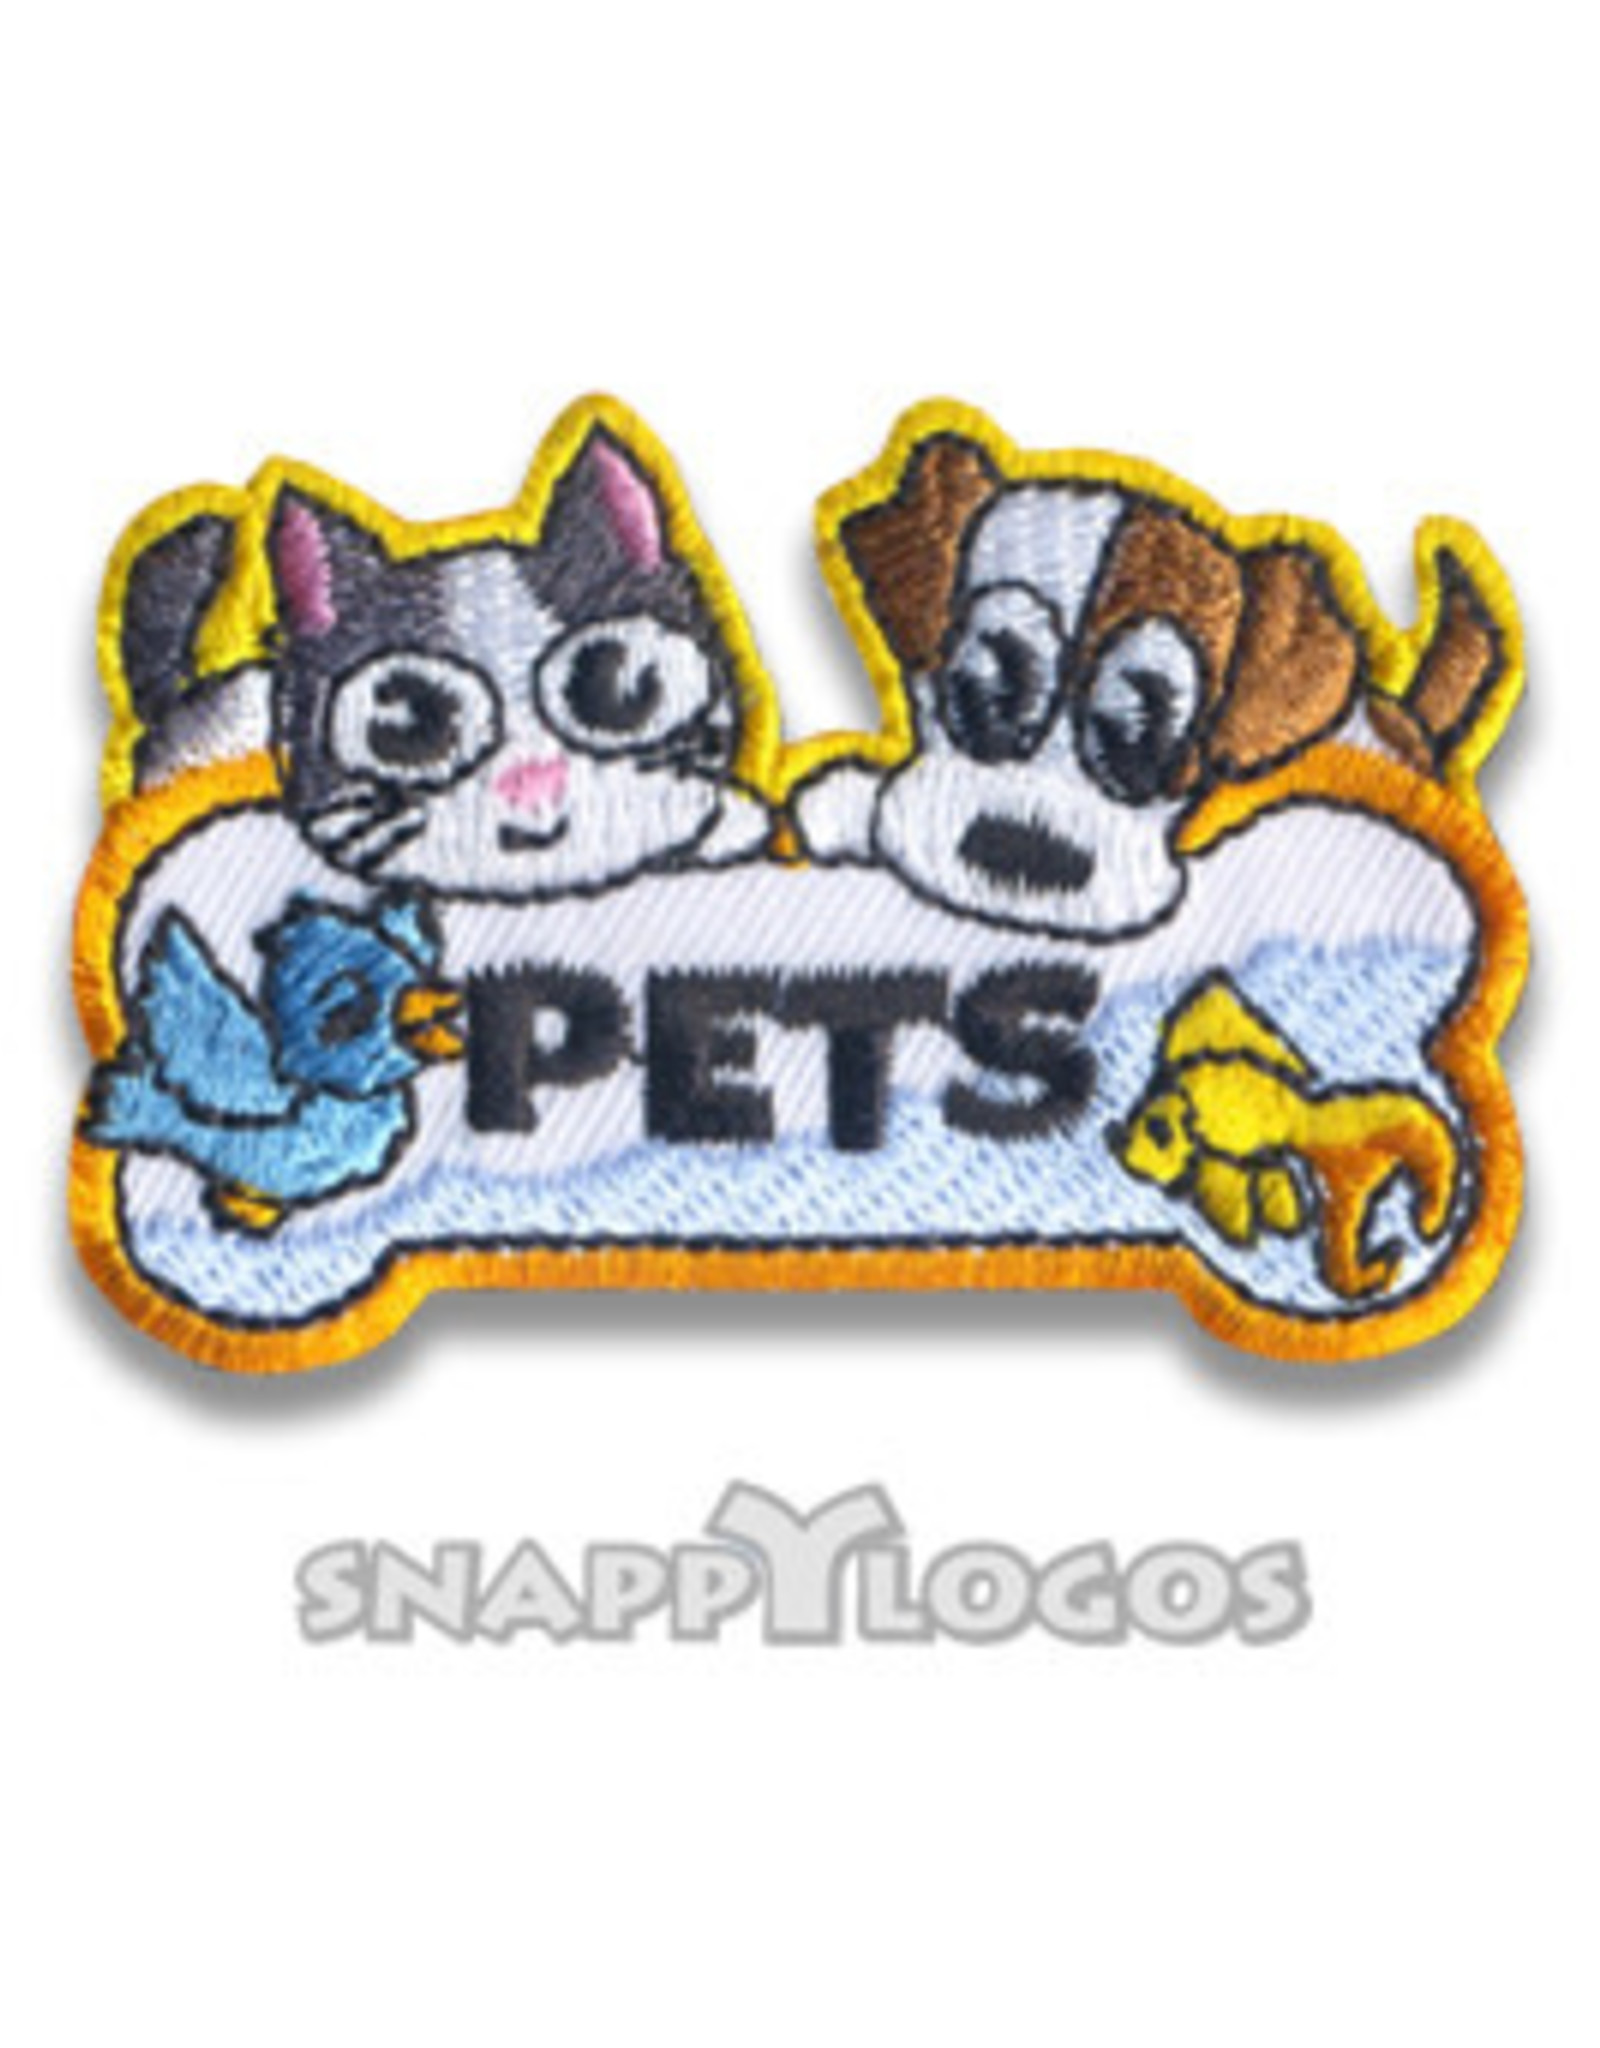 snappylogos Snappylogo Pets /w bone Fun patch (8202)